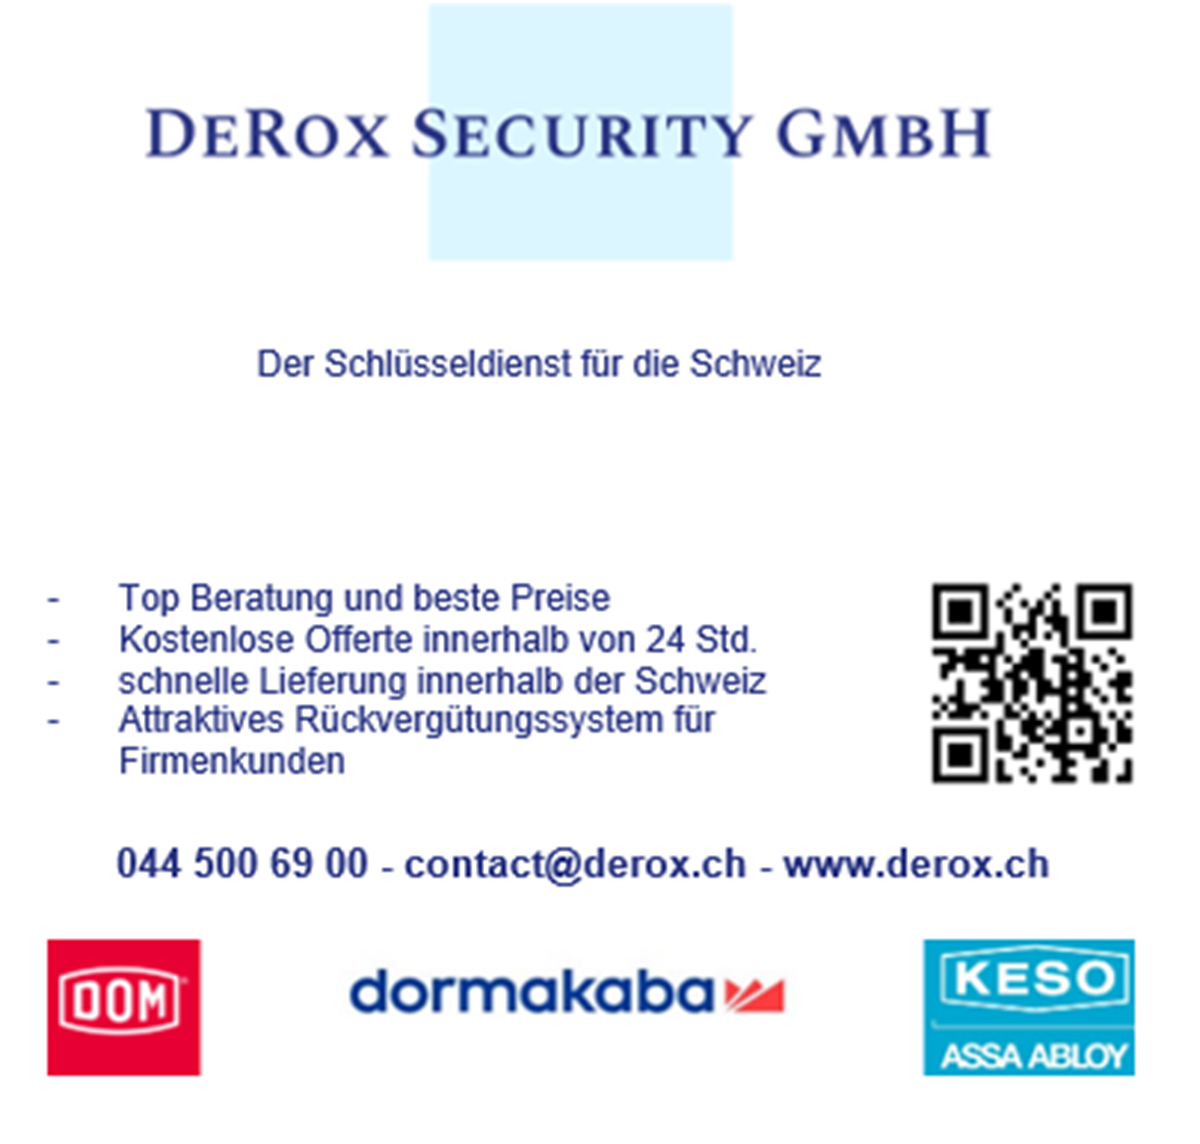 DeRox Security GmbH